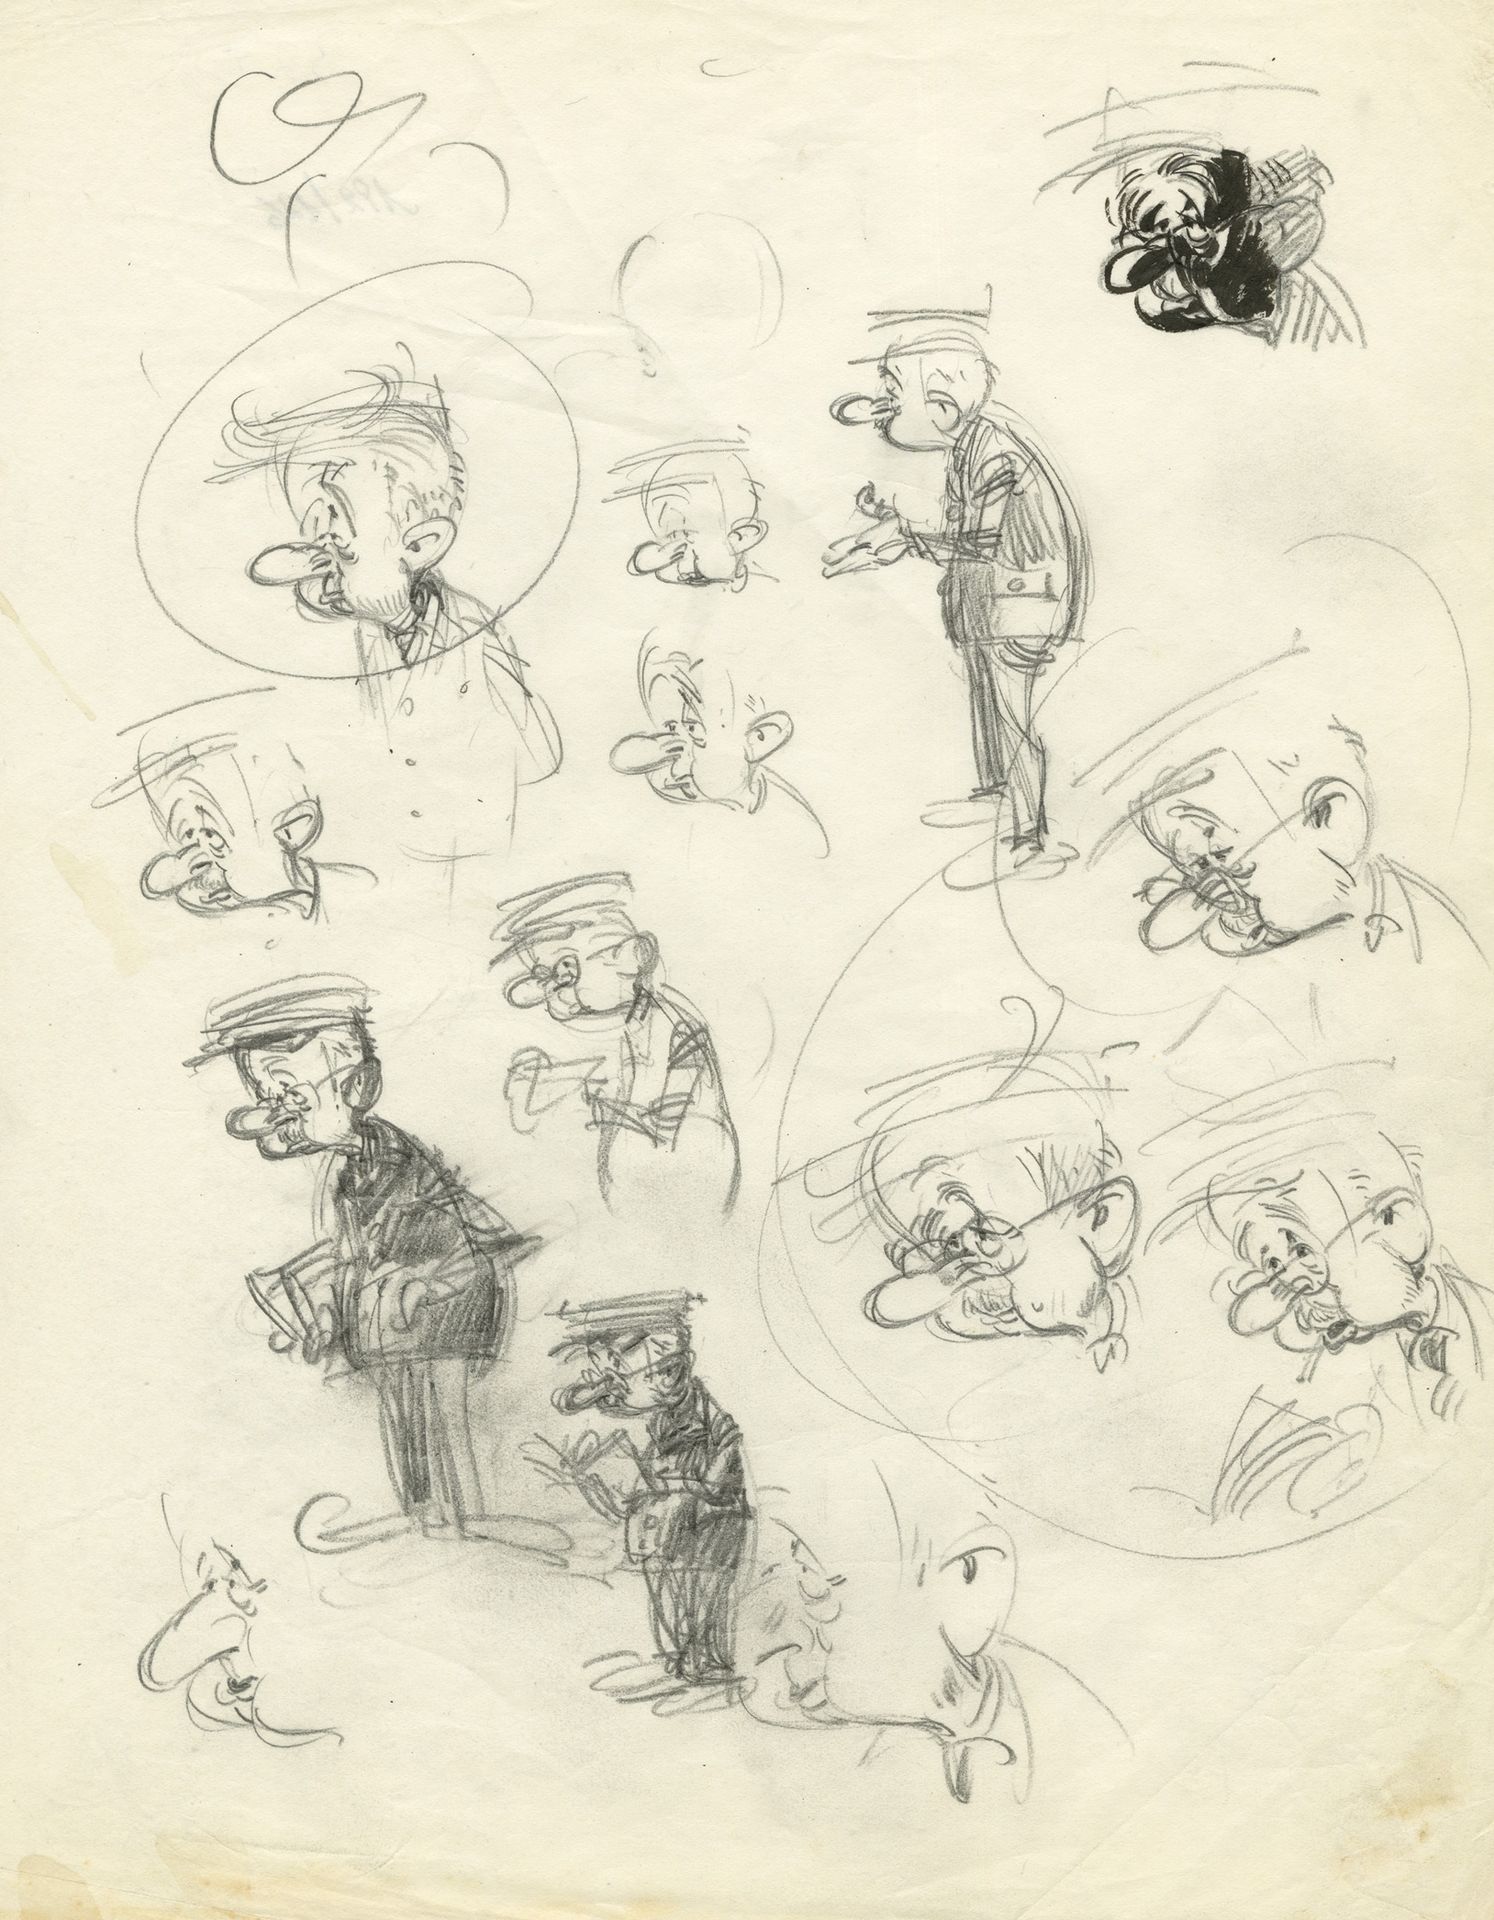 ANDRE FRANQUIN (1924-1997) Grafite su carta.
25,5x20,5 cm.